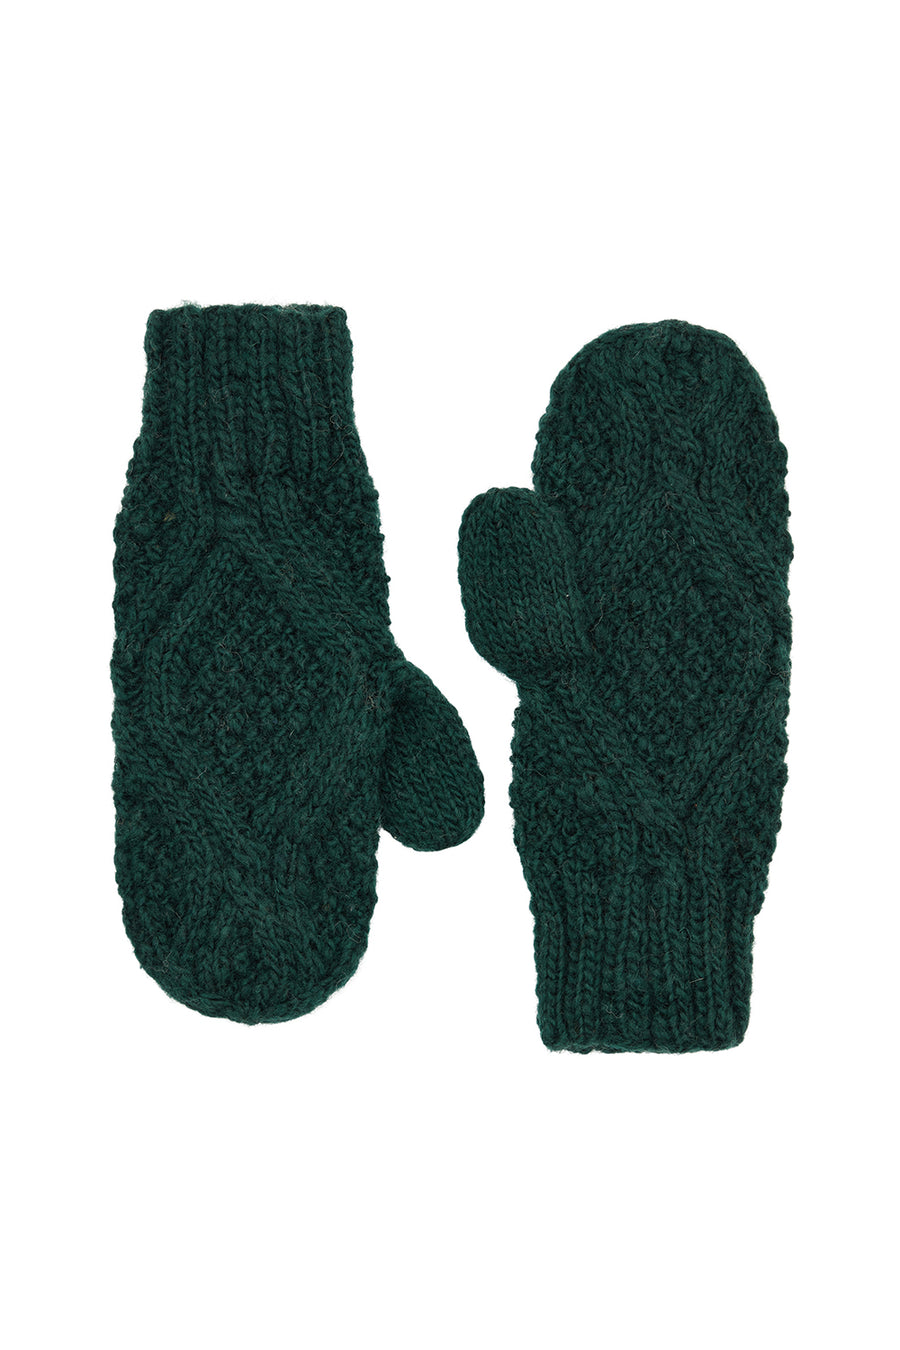 Diamond Hand-Knitted Mittens in Dark Green Wool